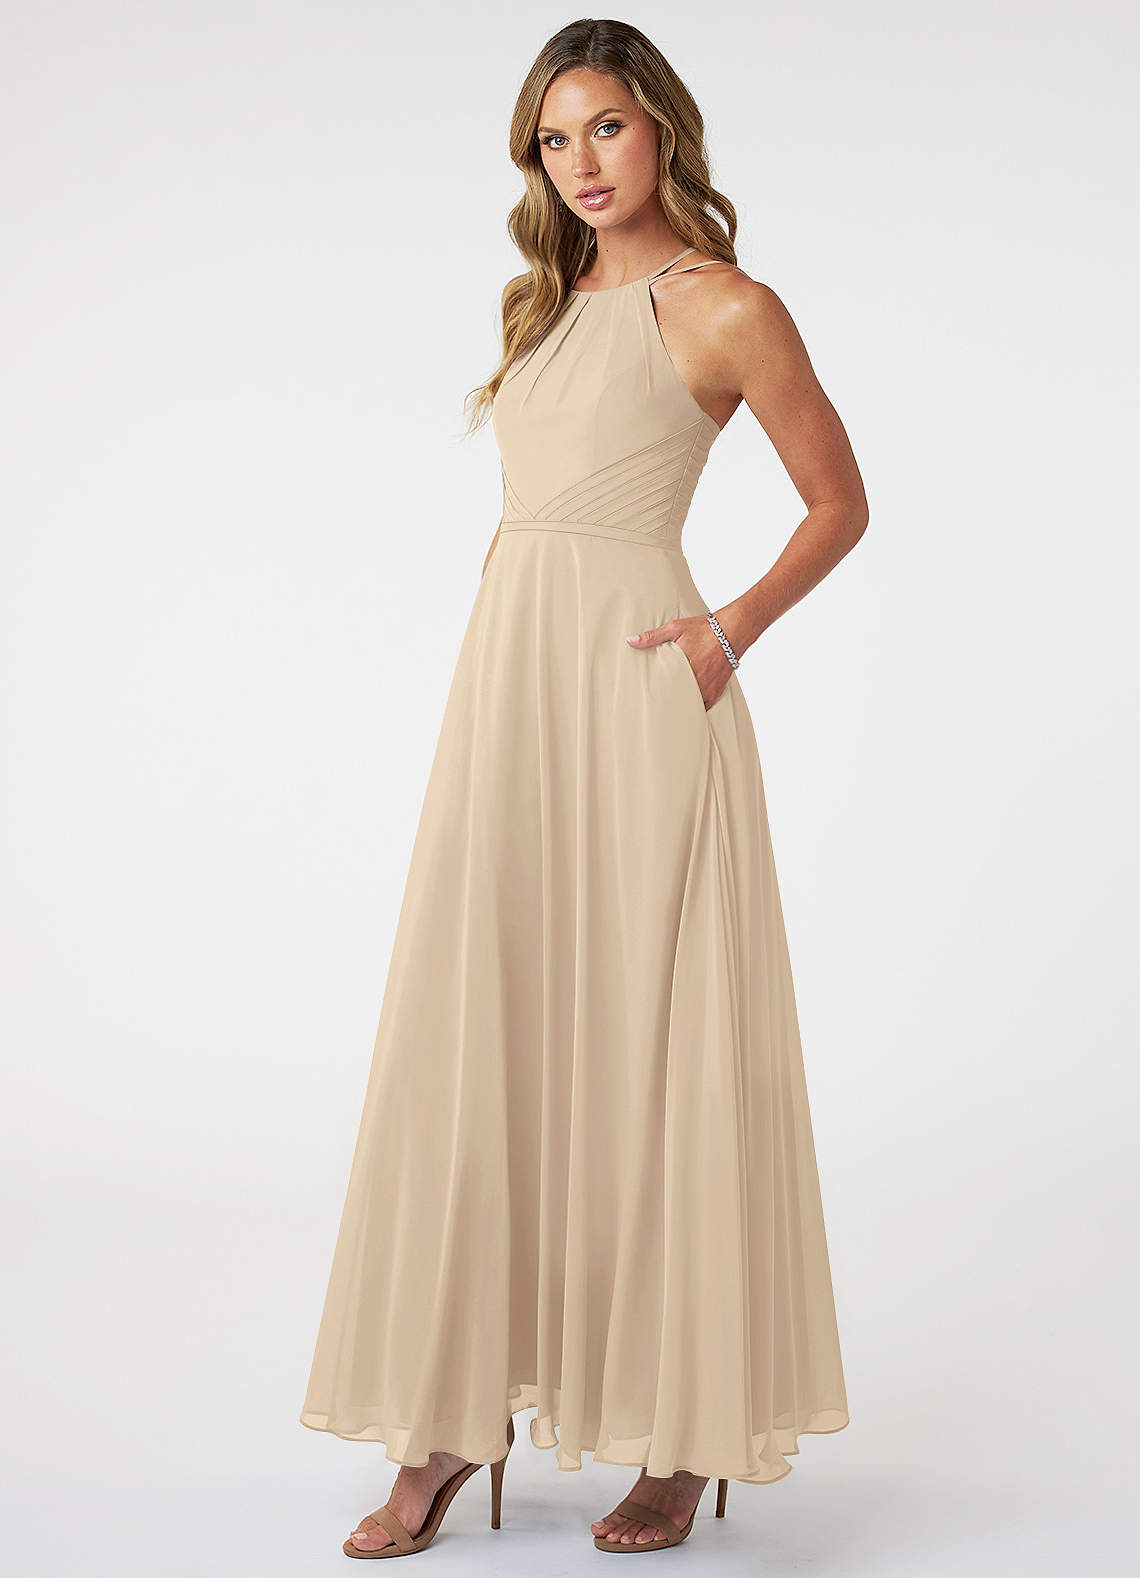 Azazie Melinda Bridesmaid Dresses A-Line Pleated Chiffon Floor-Length Dress image1